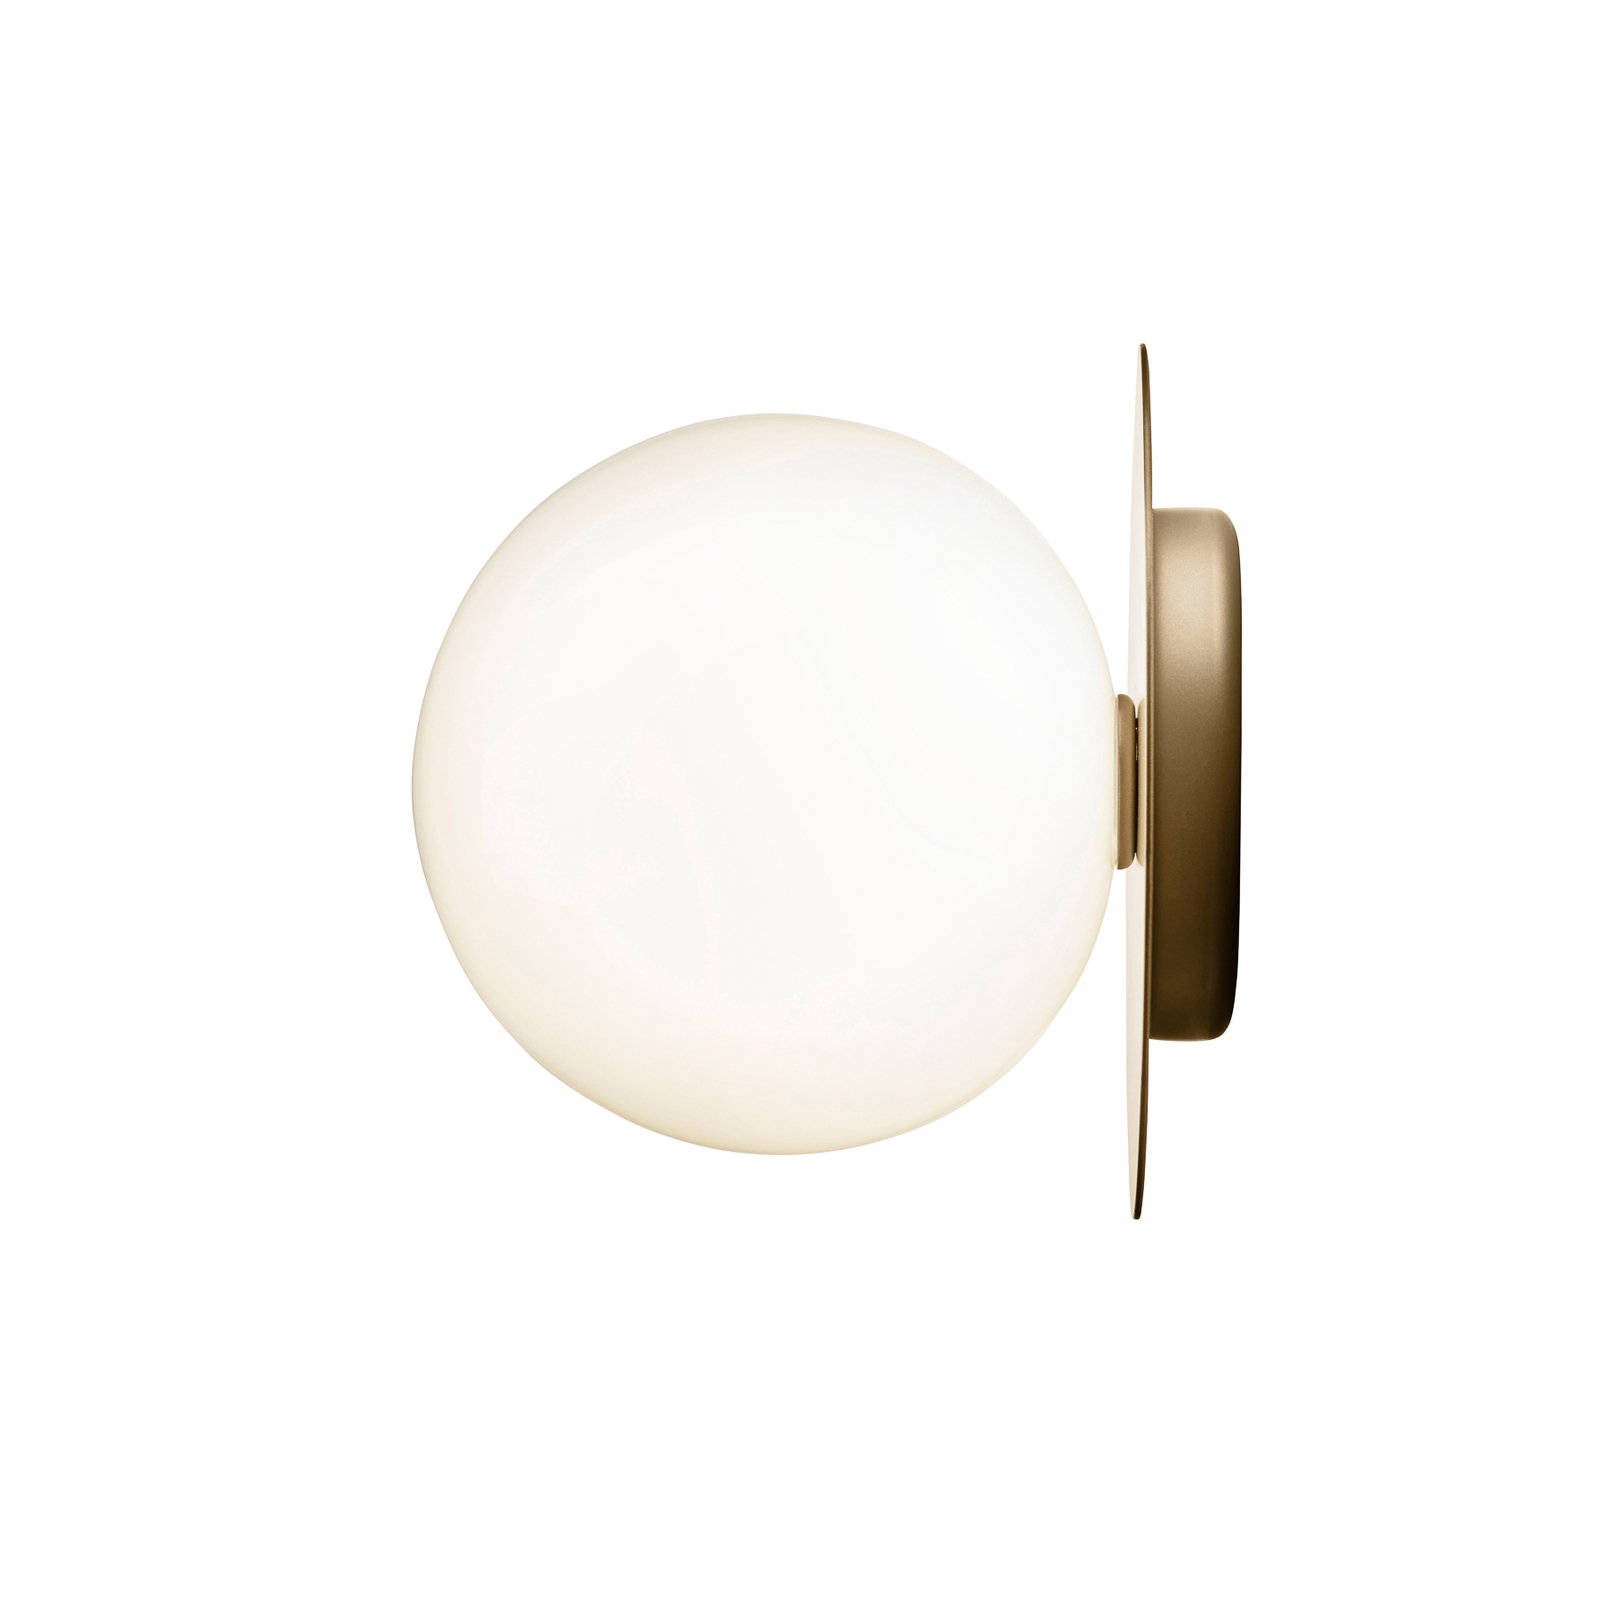 Nuura Liila 1 Large wandlamp 1-lamp goud/wit